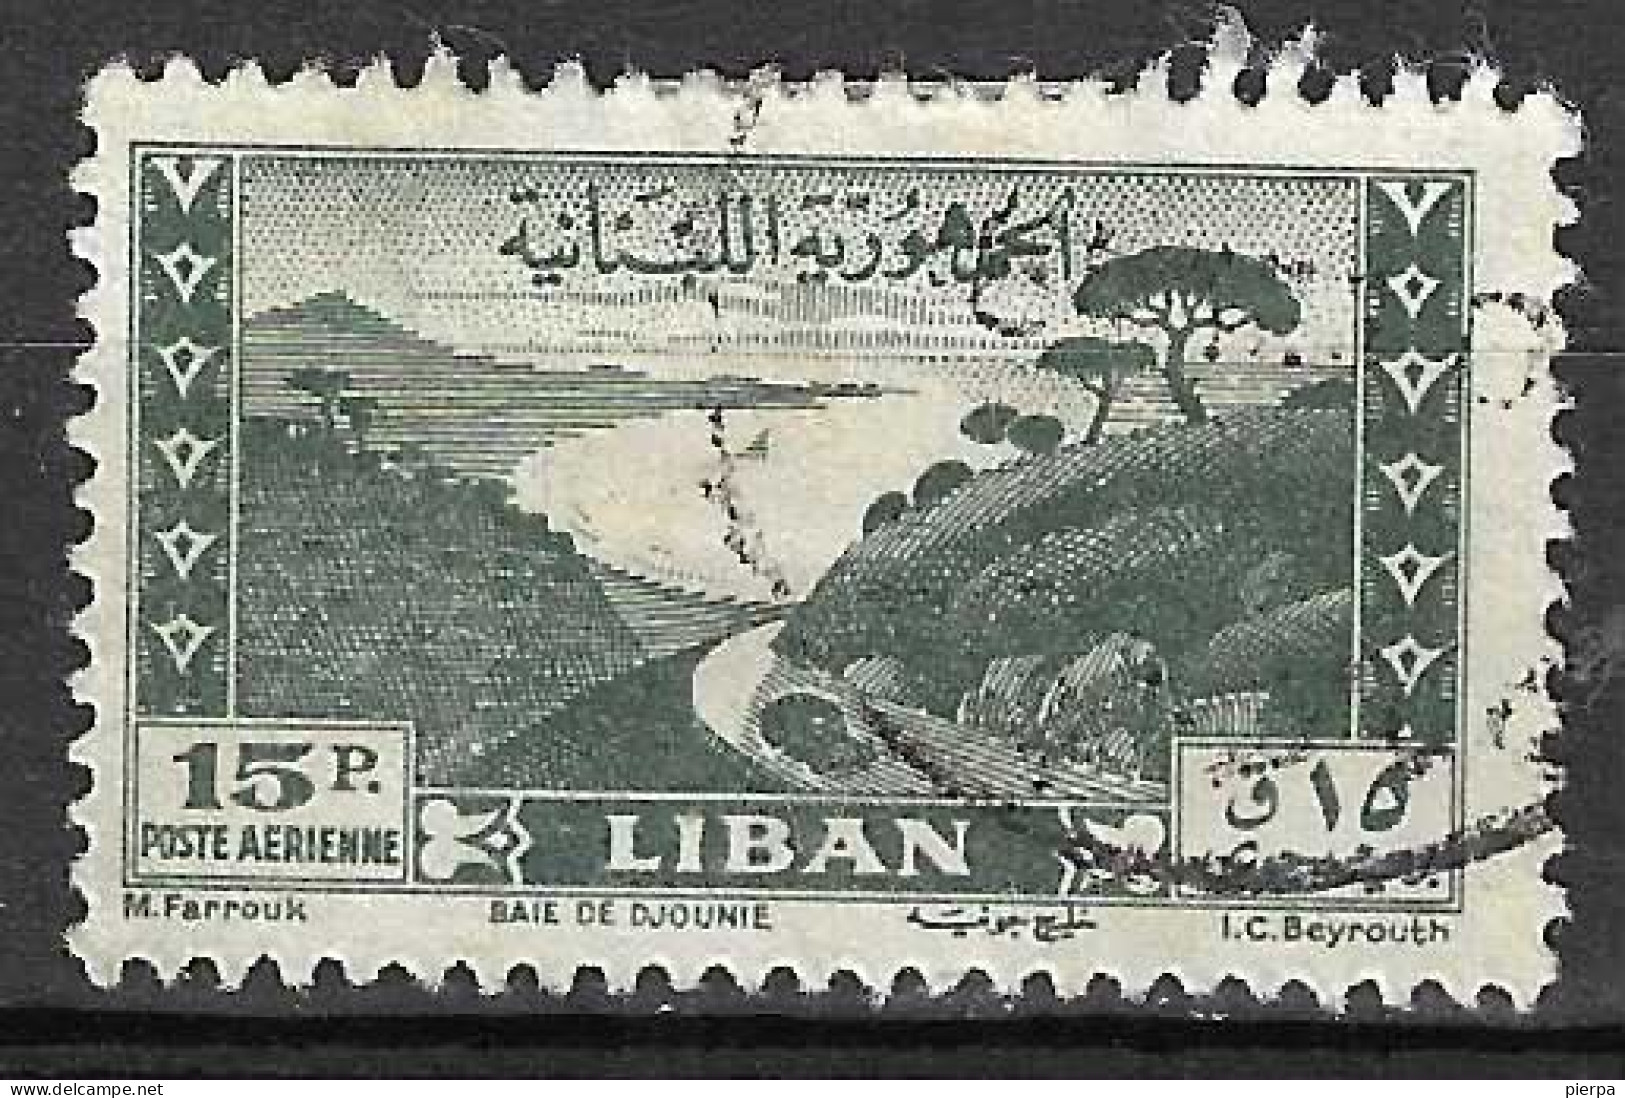 LIBANO - 1949 - AIR MAIL -  BAIE DE DJOUNIE - P. 15 - CANCELLED ( YVERT AV. 52 - MICHEL 422) - Libanon